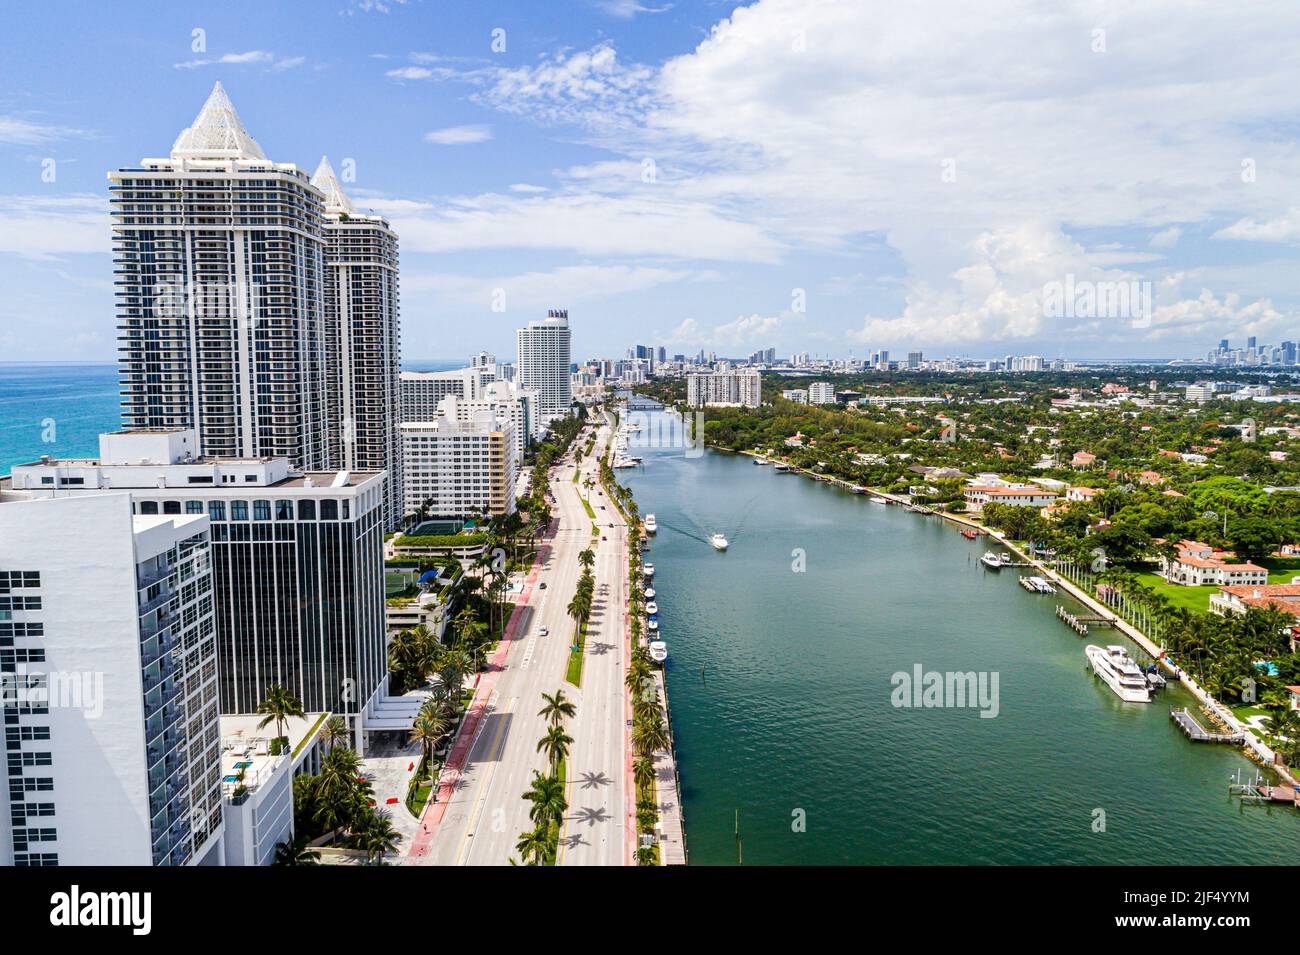 Miami Beach Florida,aerial overhead view from above,Indian Creek La Gorce Island Blue Green Diamond luxury high rise condominium buildings,Collins Ave Stock Photo